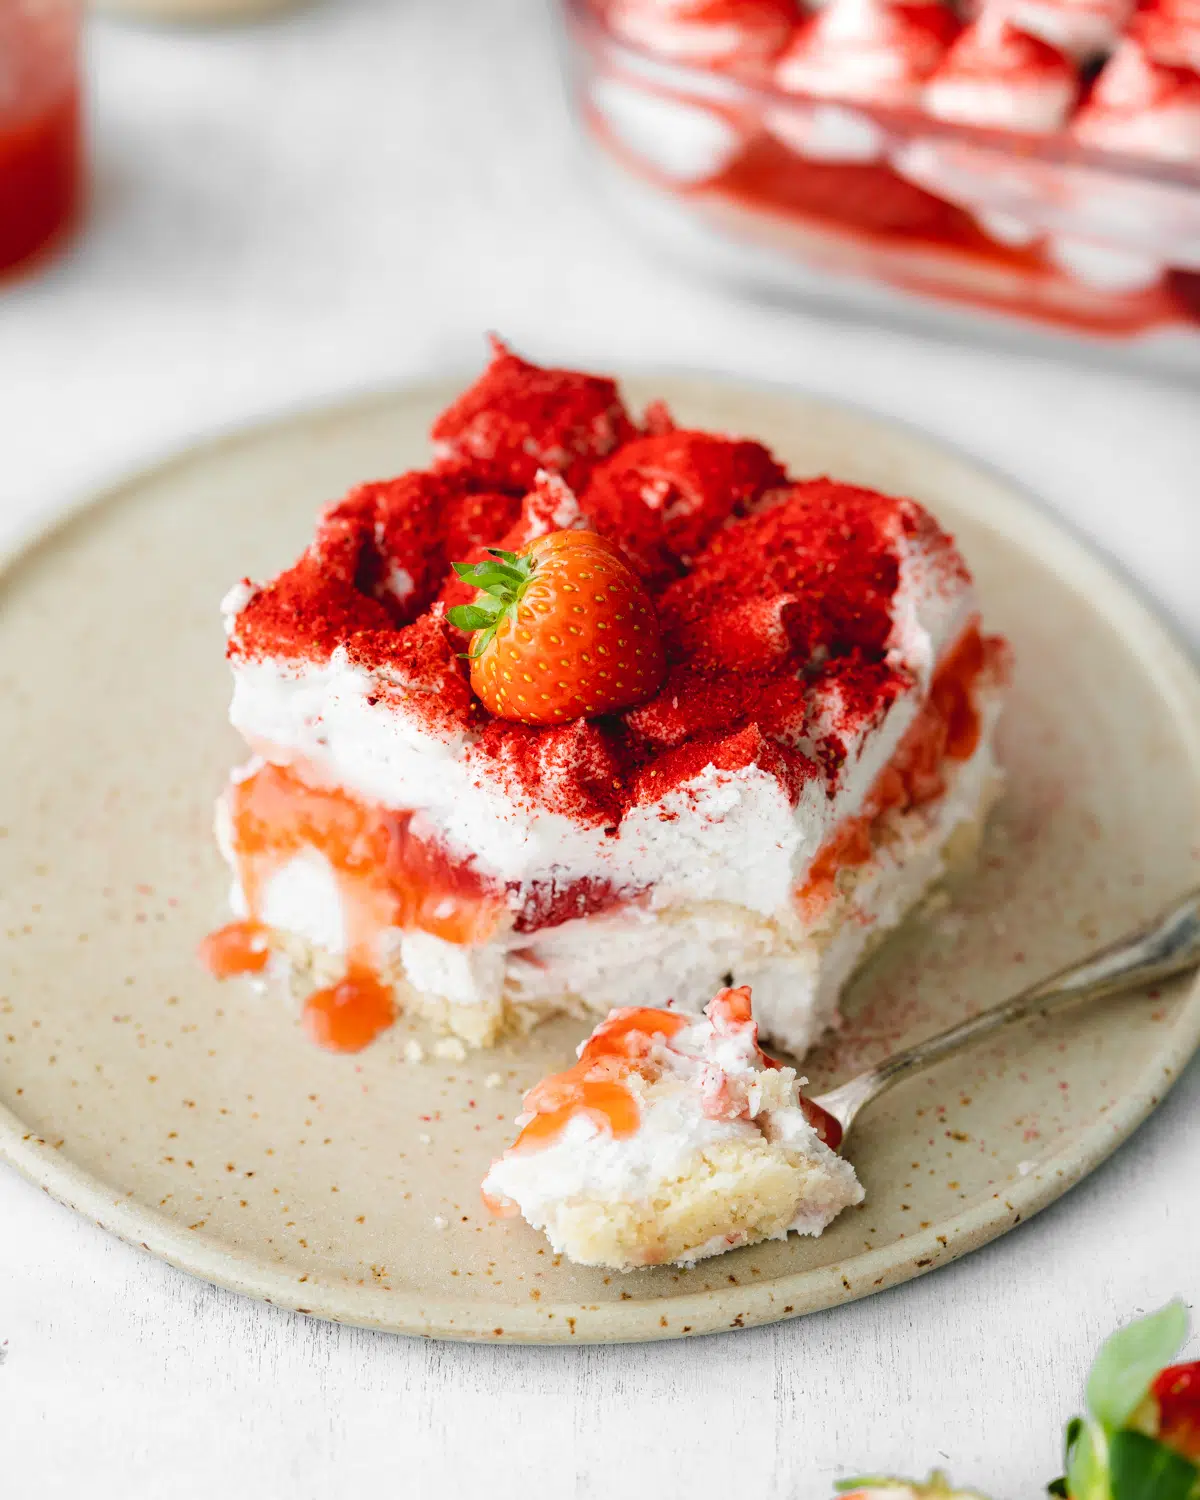 layered strawberry tiramisu on a plate with fresh strawberries and strawberry sauce.